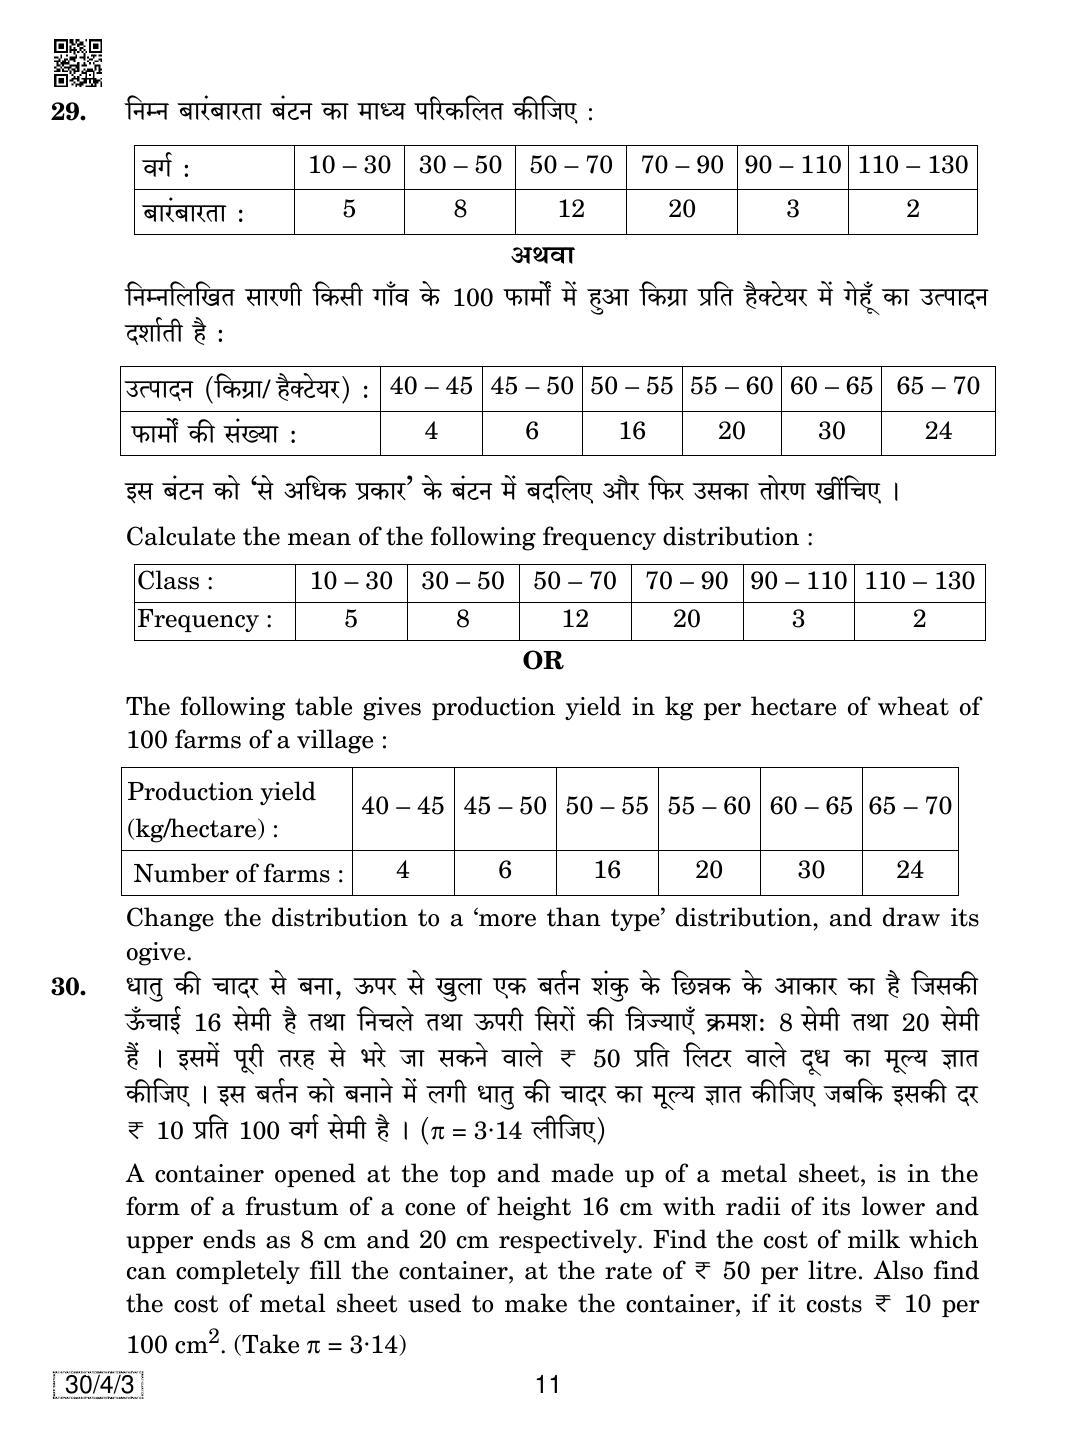 CBSE Class 10 30-4-3 MATHEMATICS 2019 Question Paper - Page 11